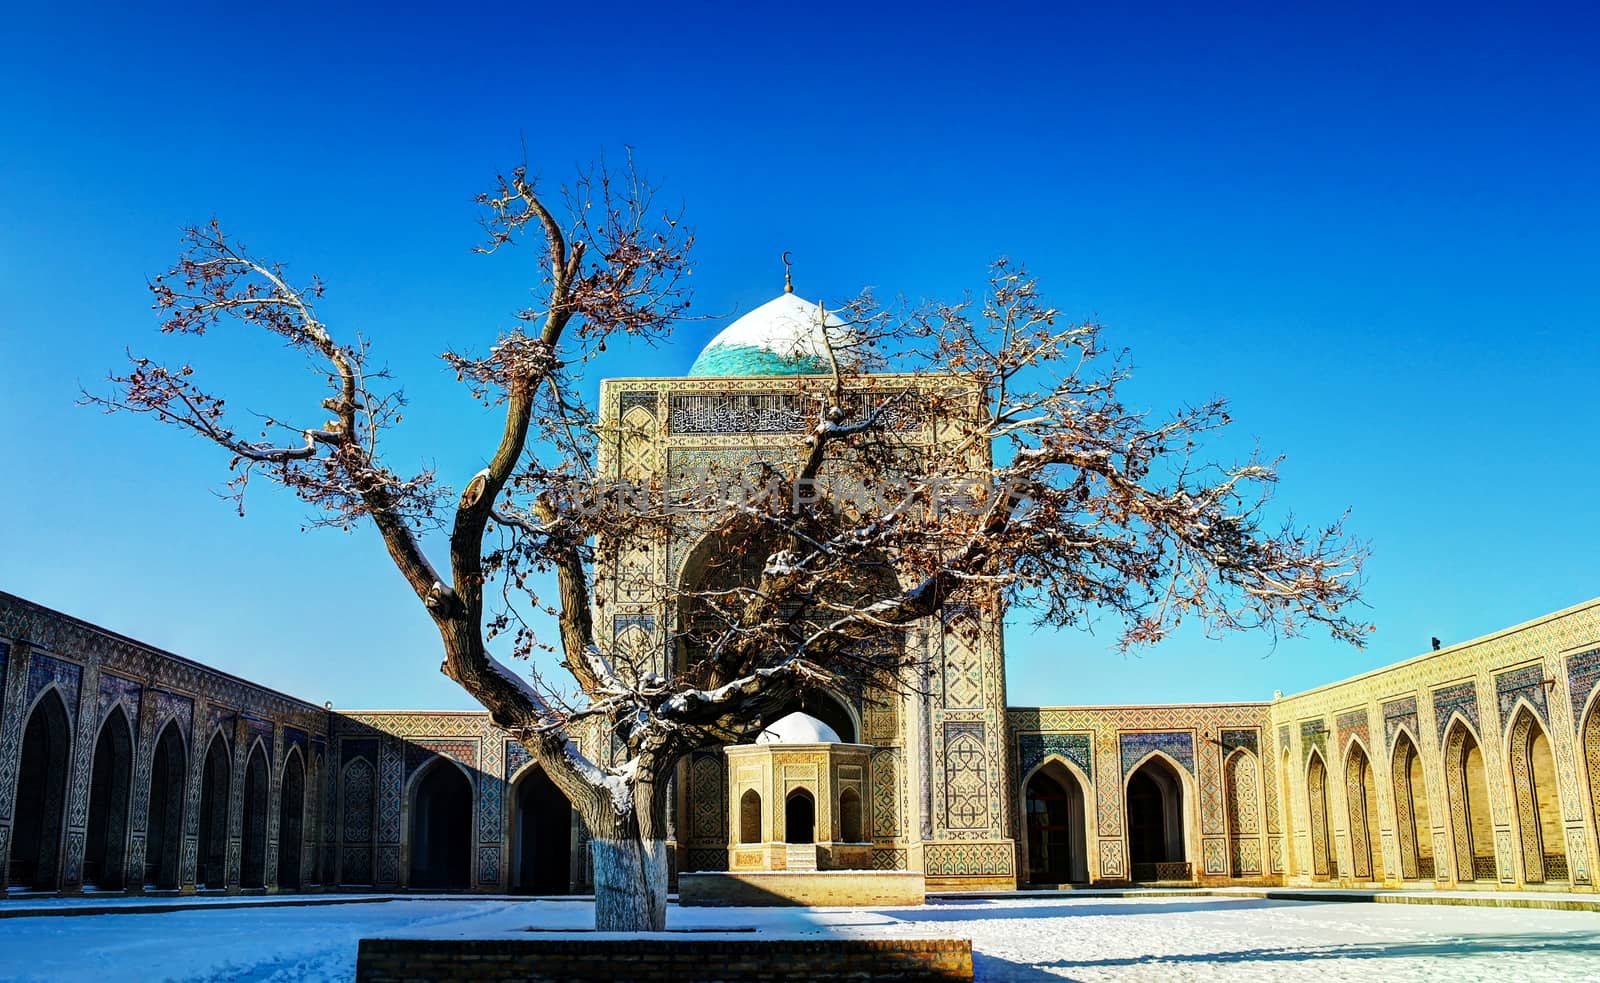 Mosque Kalyan courtyard in Bukhara, Uzbekistan by homocosmicos